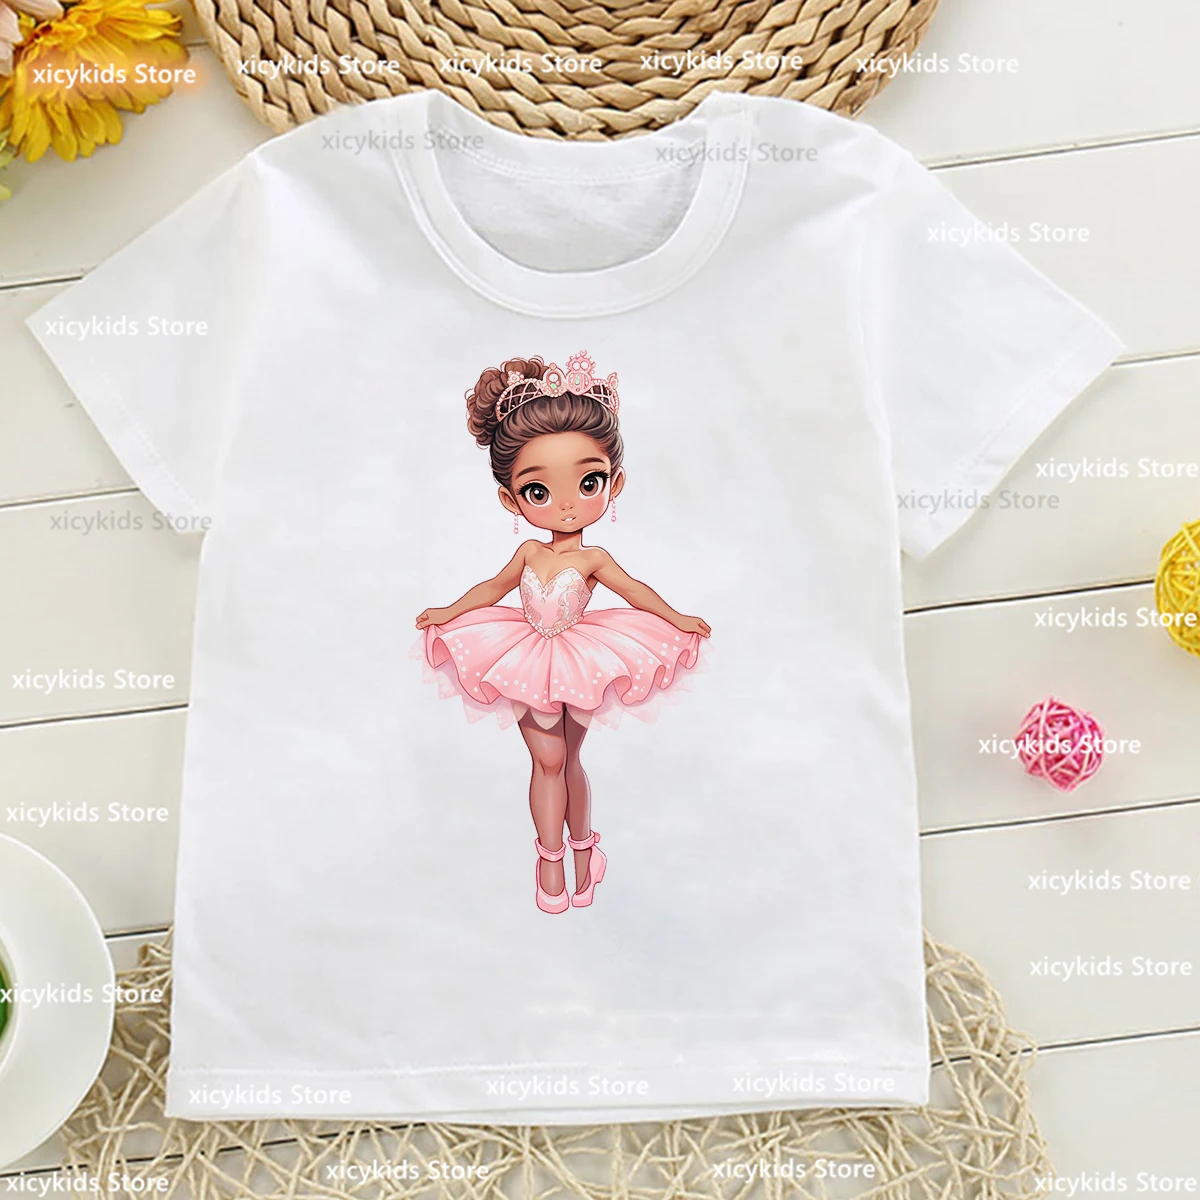 

New Girls T-shirts Cute Dance Girl Print Tshirt Funny Ballet Dance Enthusiast T shirt Fashion Girl Dance Tshirts Tops wholesale